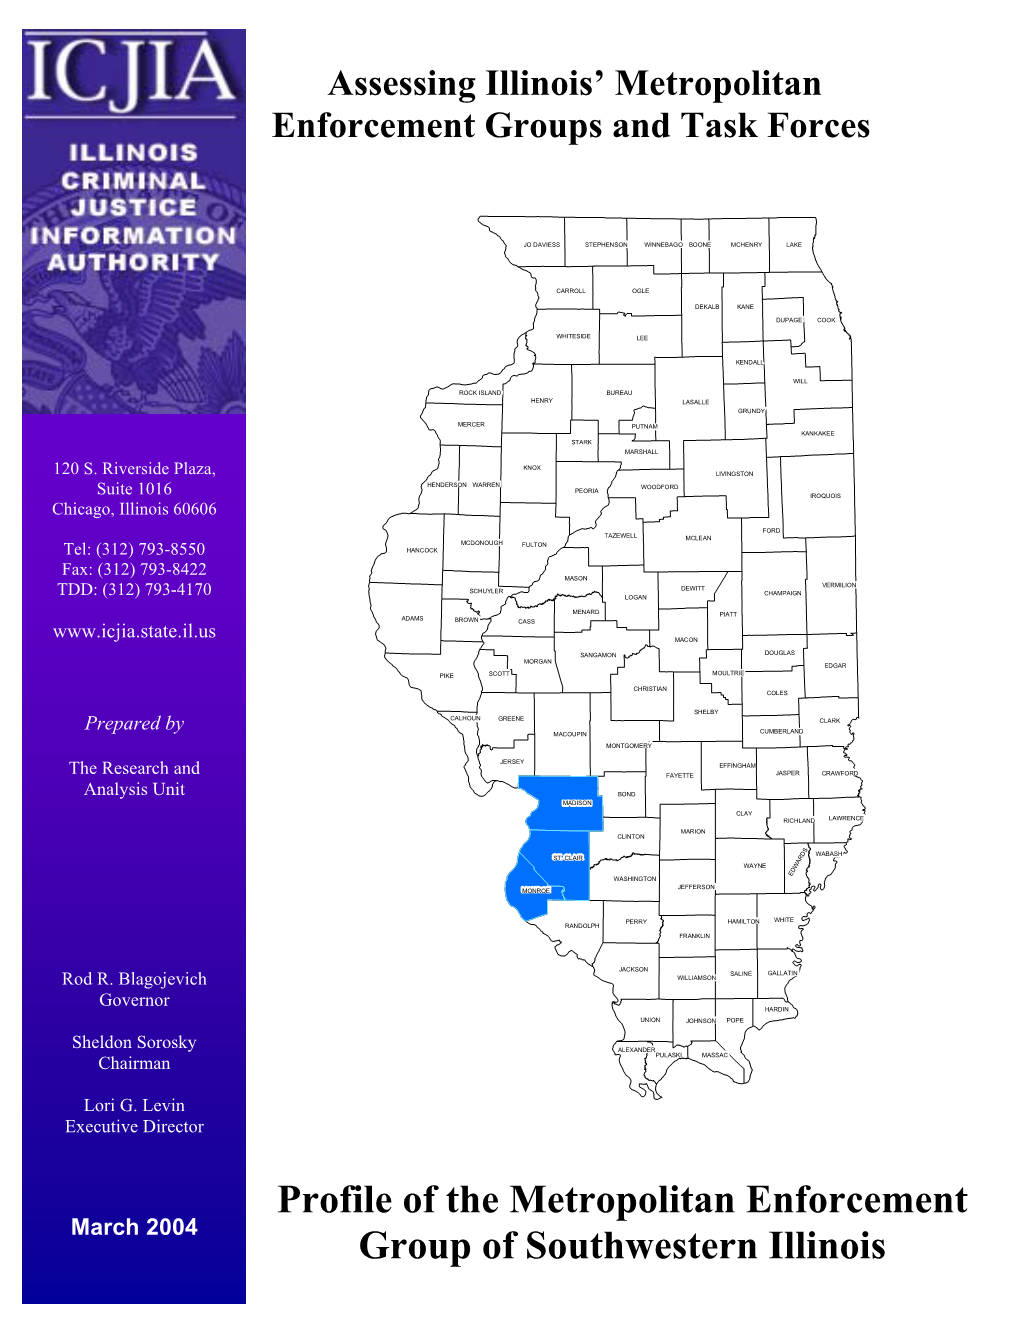 Profile of the Metropolitan Enforcement Group of Southwestern Illinois